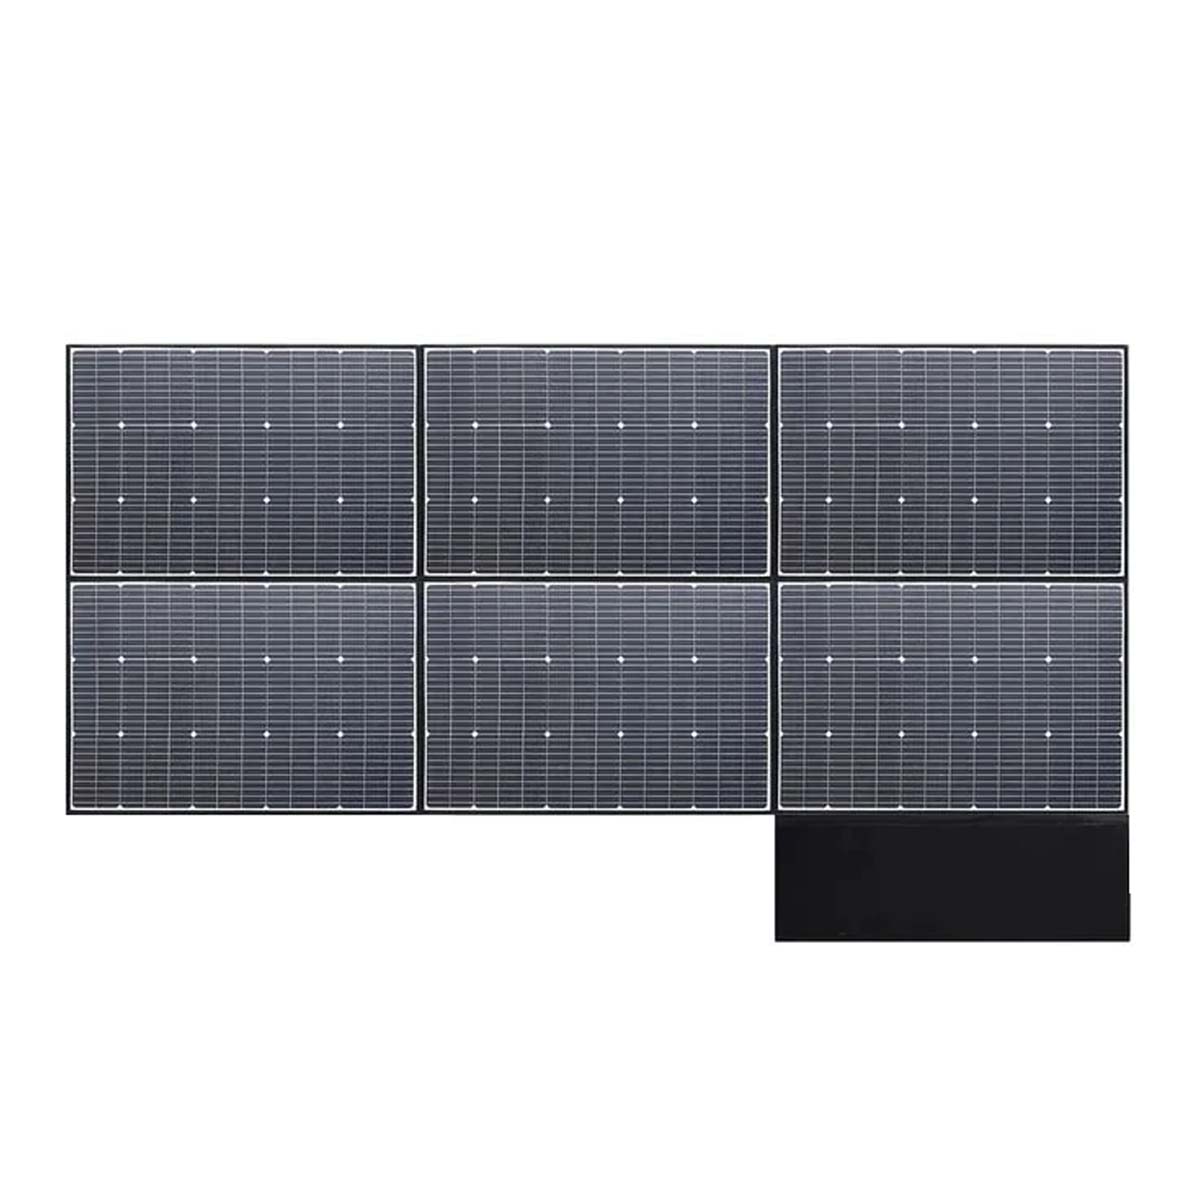 ALLPOWERS 600W Faltbares Solarpanel Monokristalliner SP039